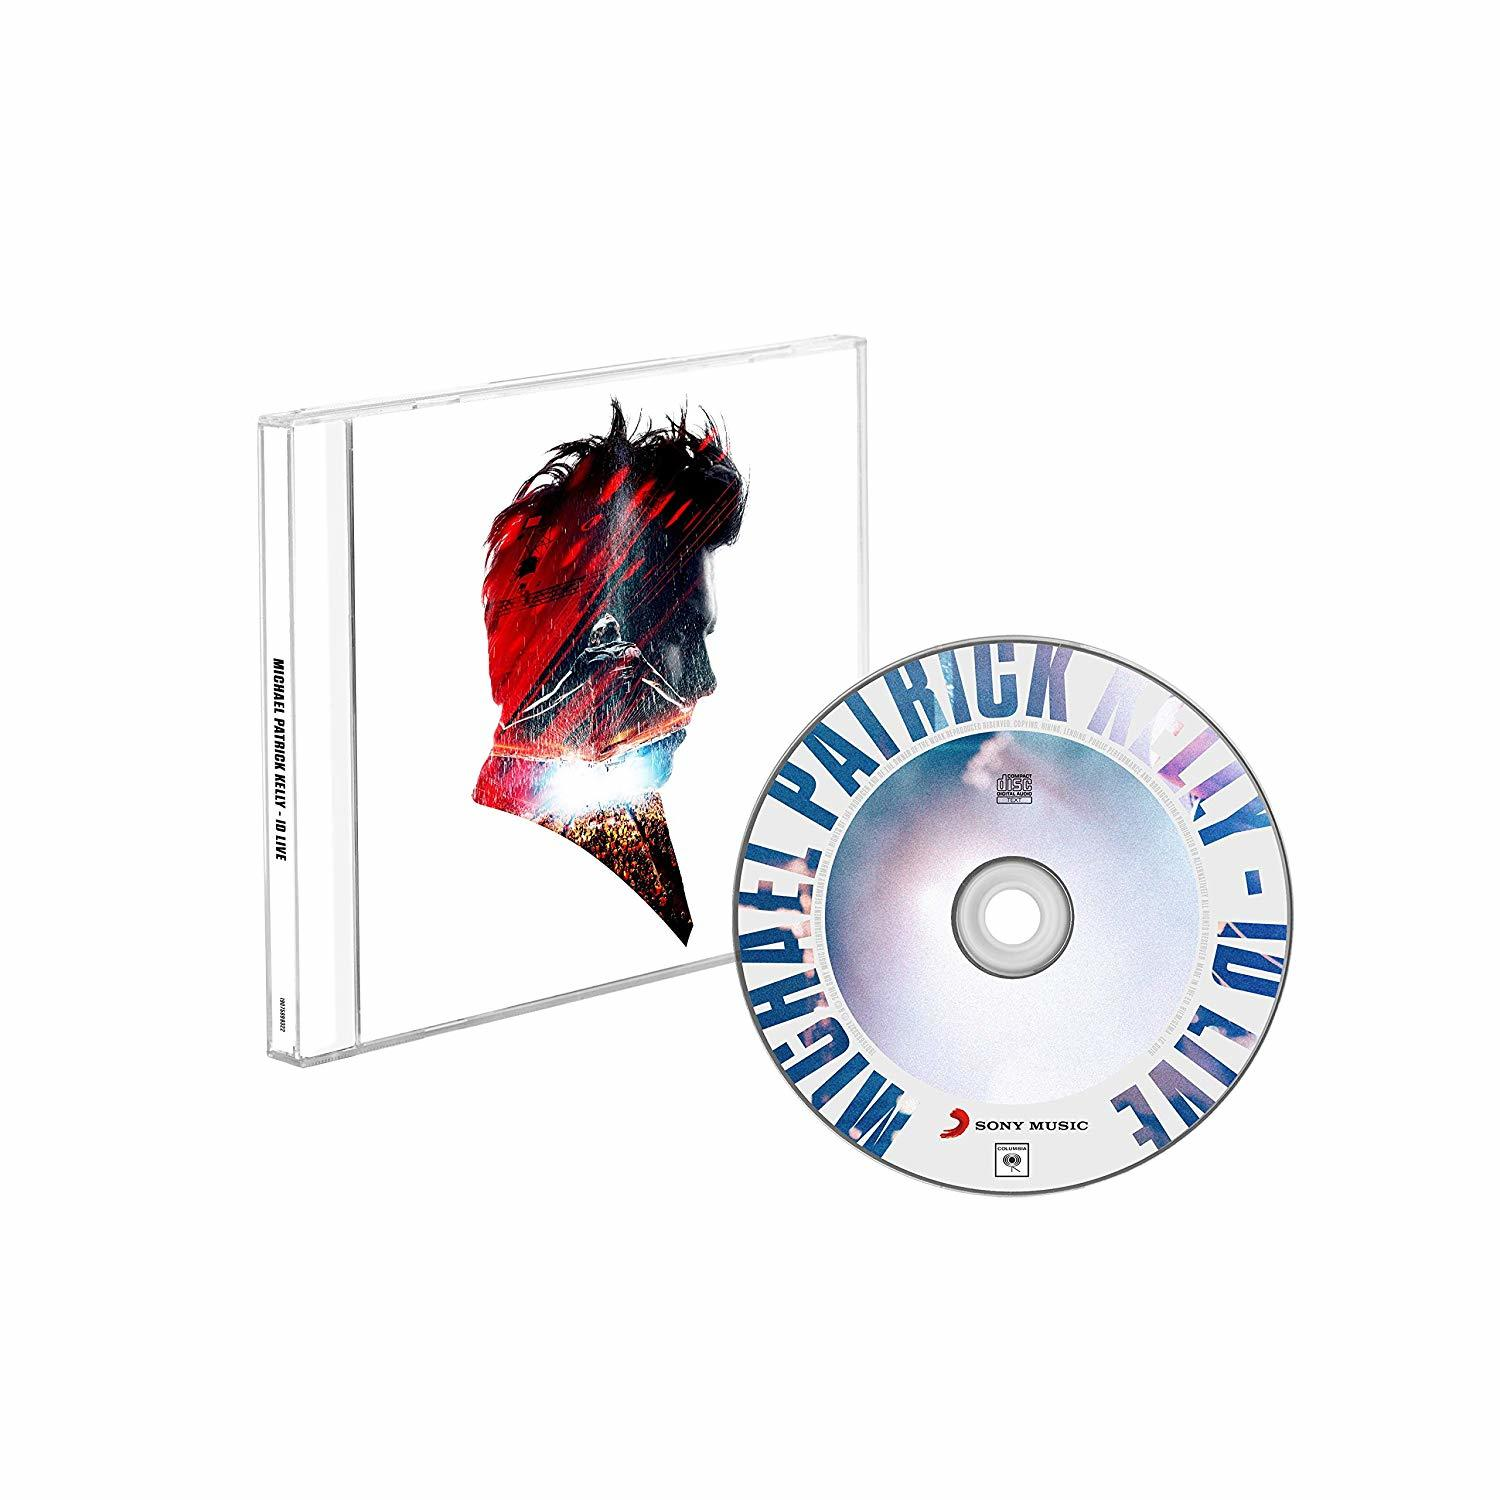 iD - Patrick Kelly (CD) - Live Michael -